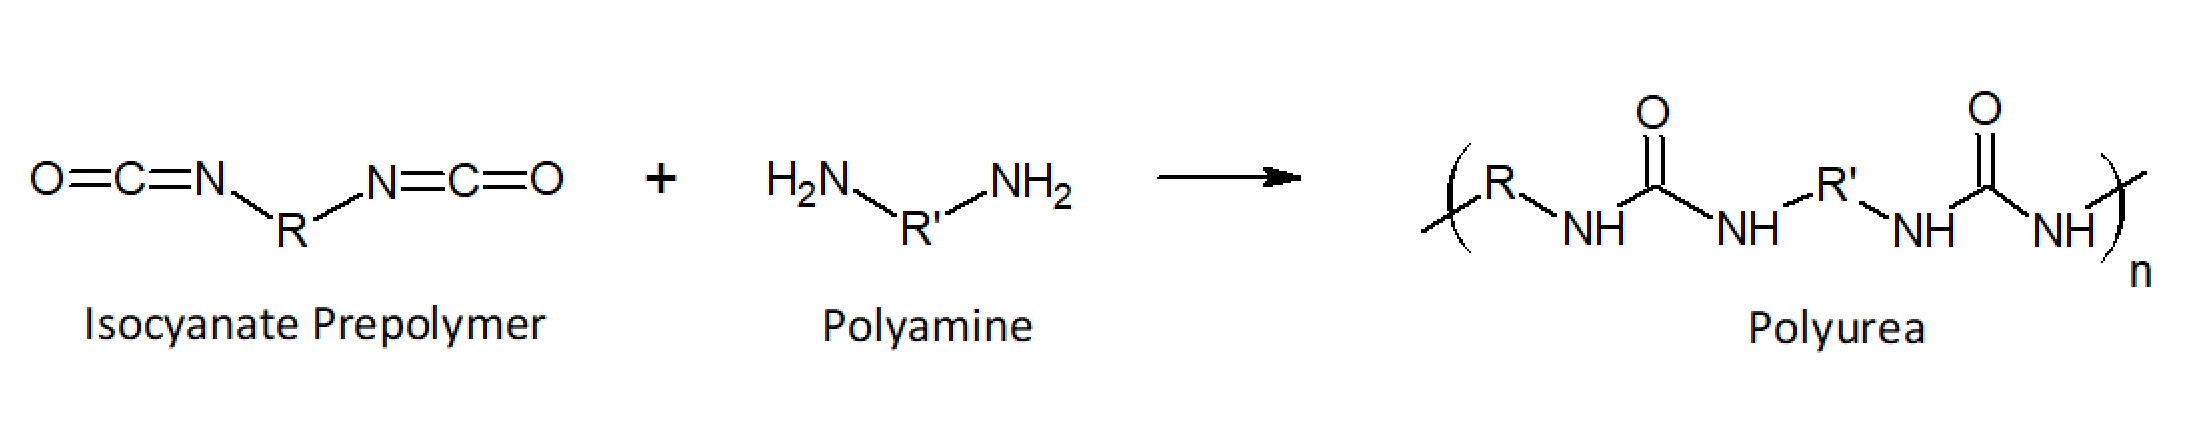 polyurea synthesis reaction